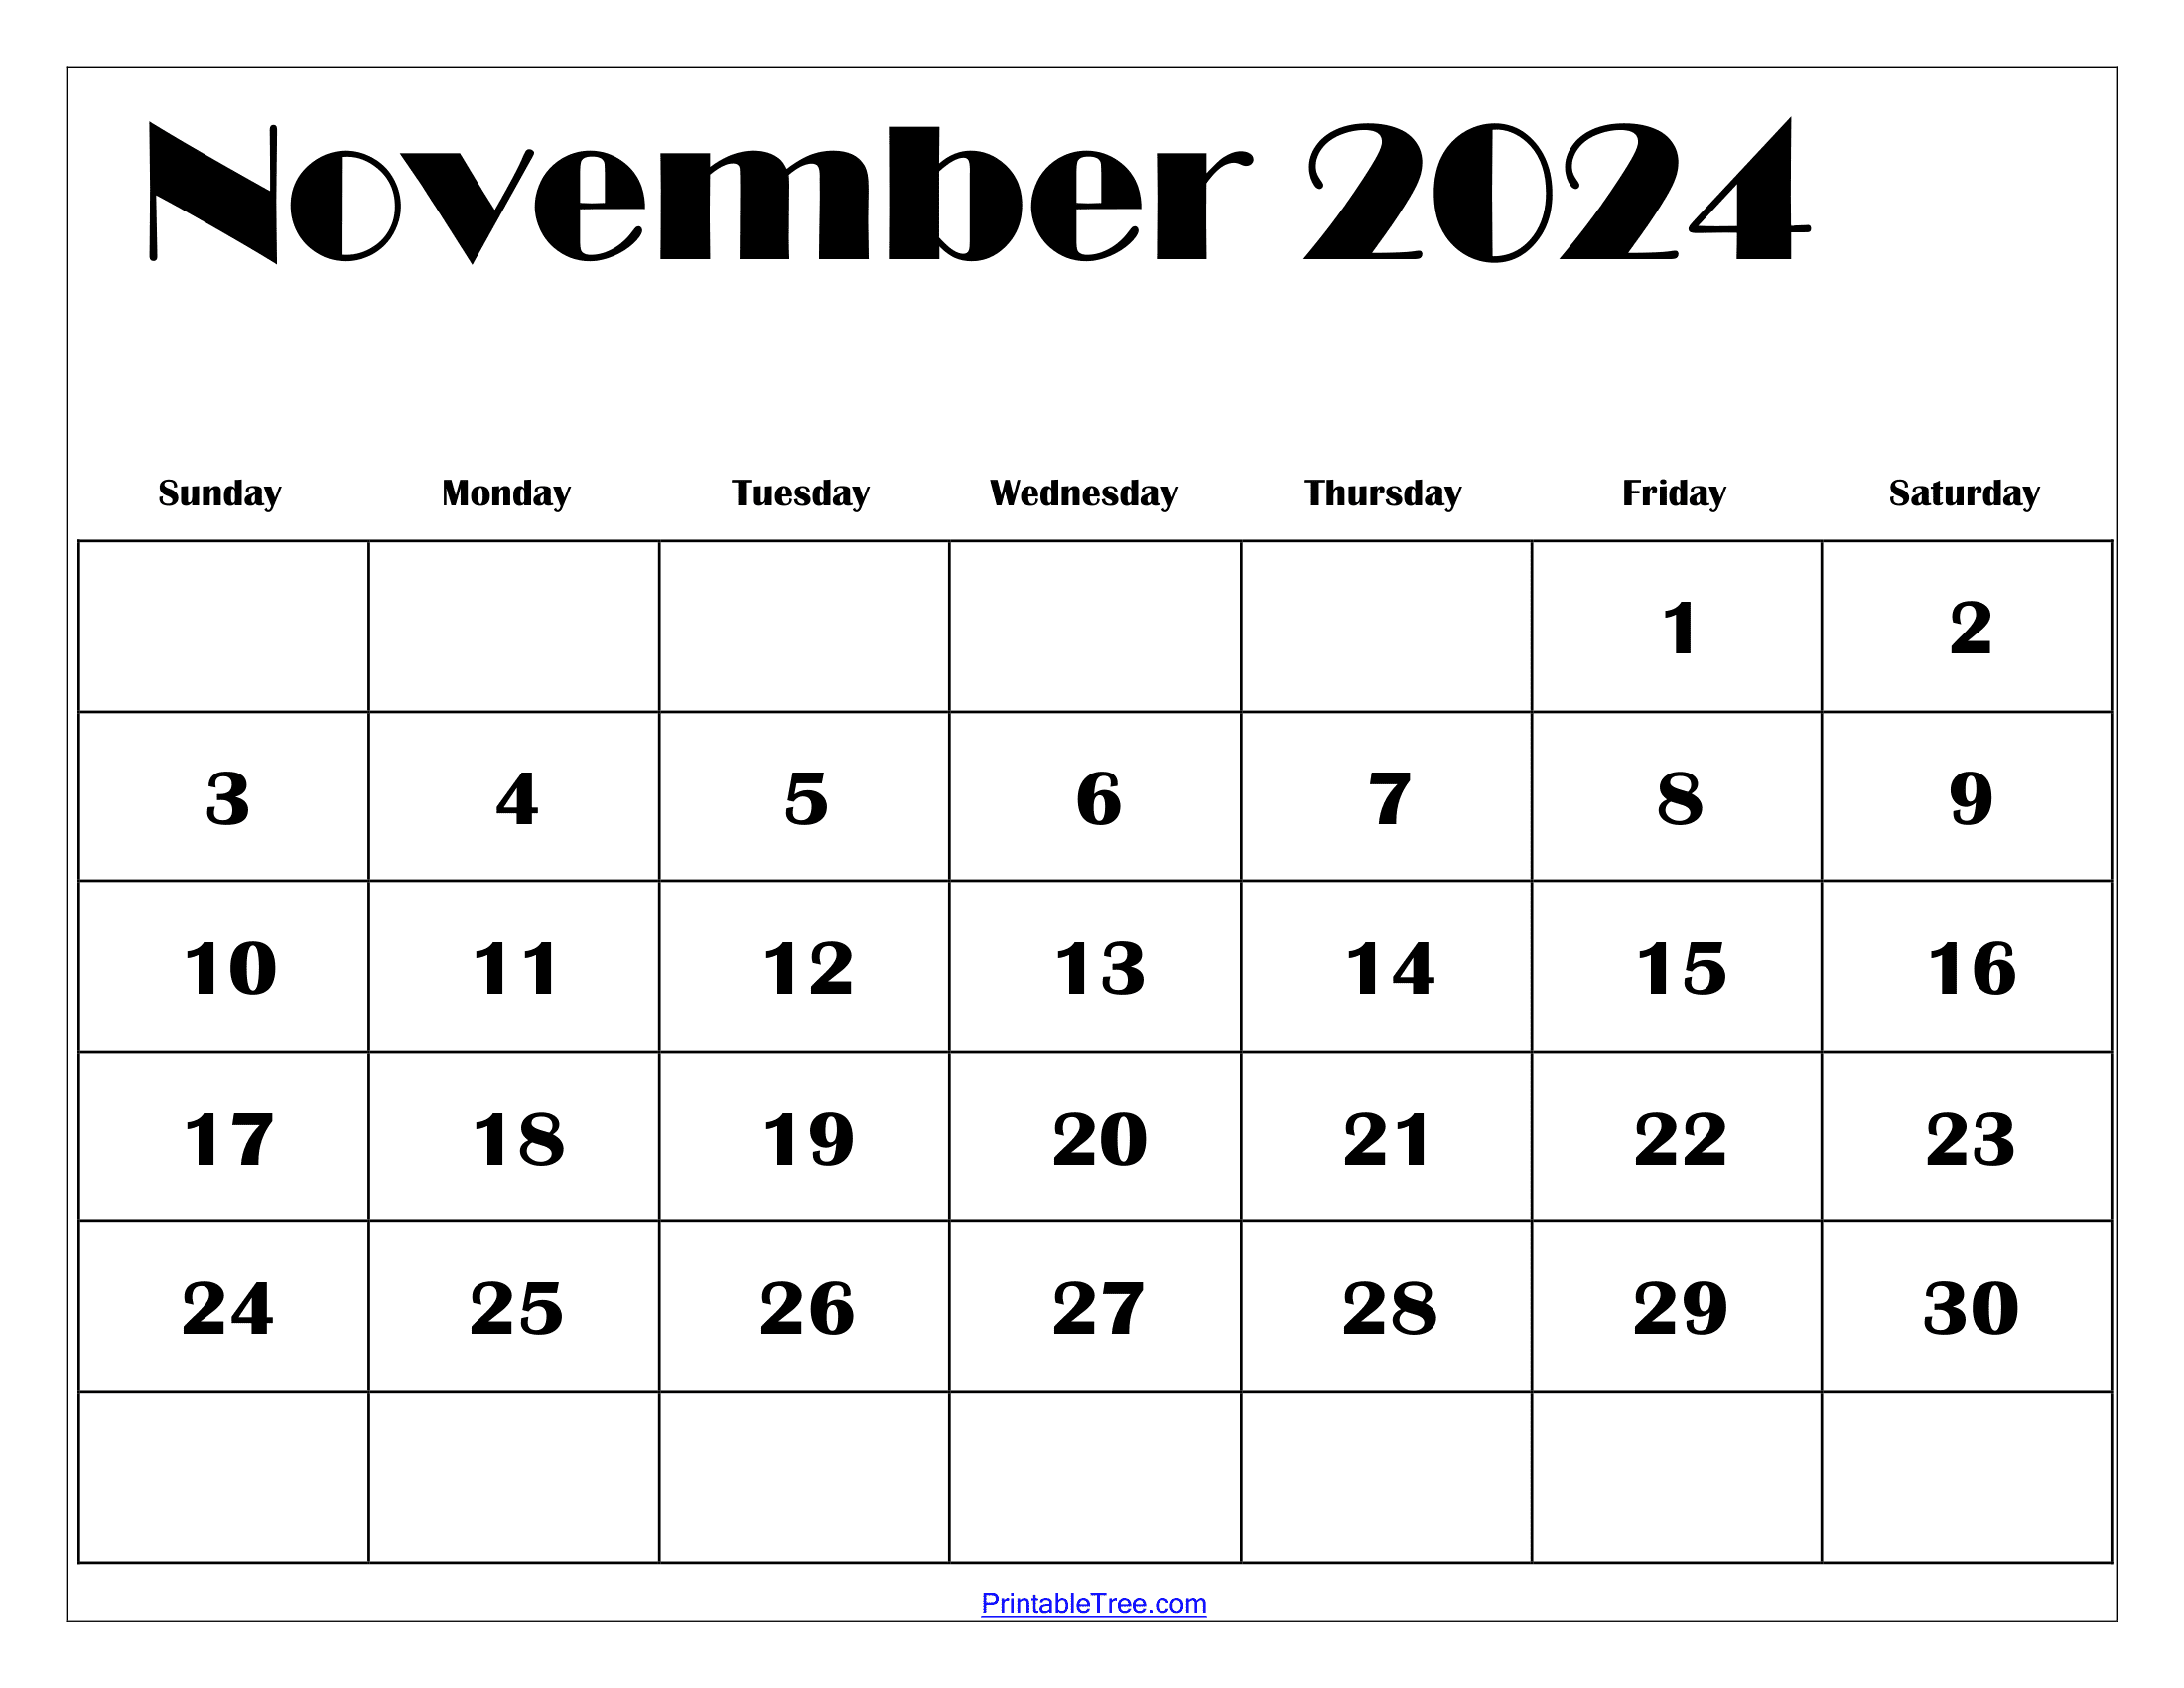 November 2024 Calendar Printable Pdf Template With Holidays for November 2024 Printable Calendar